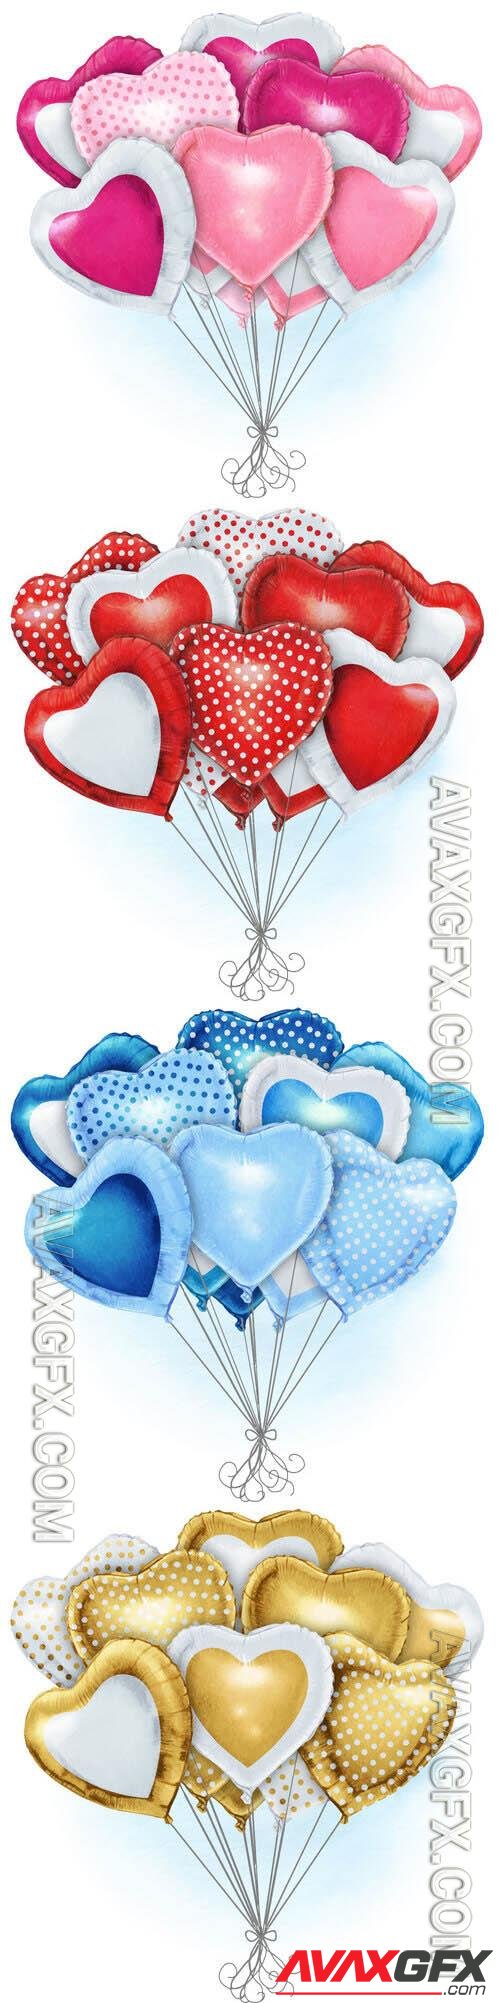 Hand drawn heart shaped realistic ballooons - Watercolor vector illustration